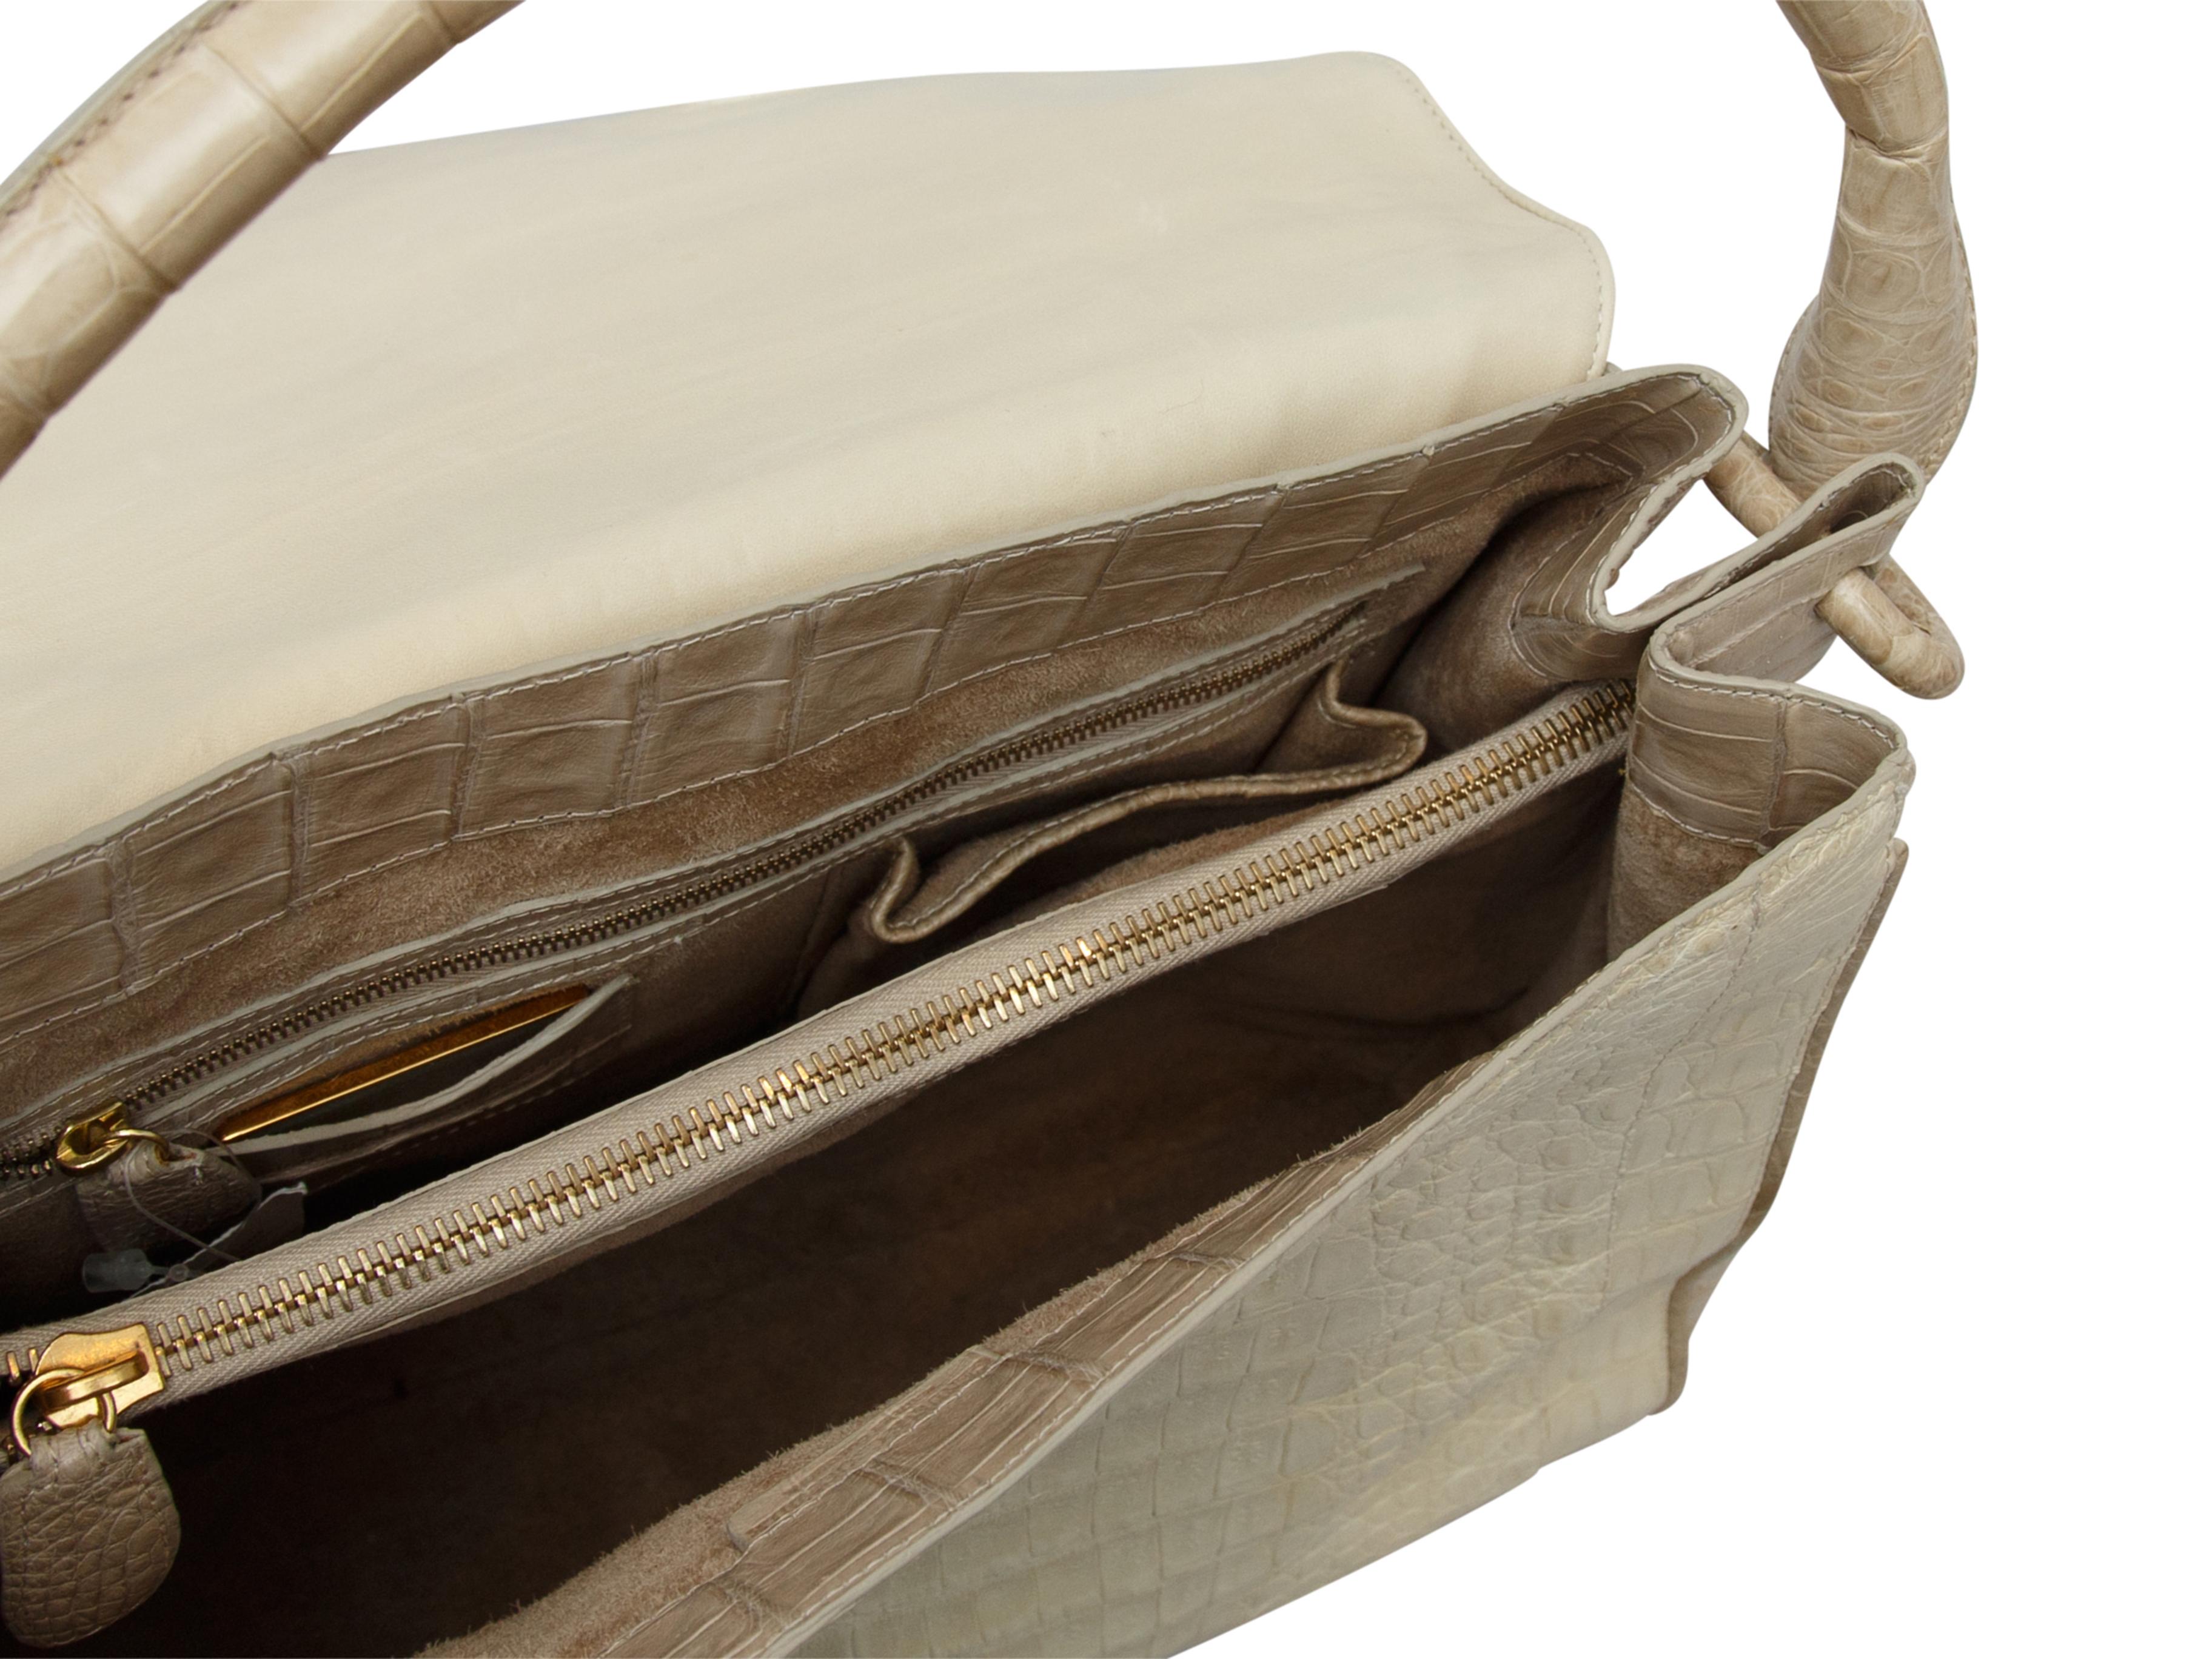 Product details: White and beige crocodile handbag by Nancy Gonzalez. Single shoulder strap. Interior zip pockets. Flap closure at top. 11